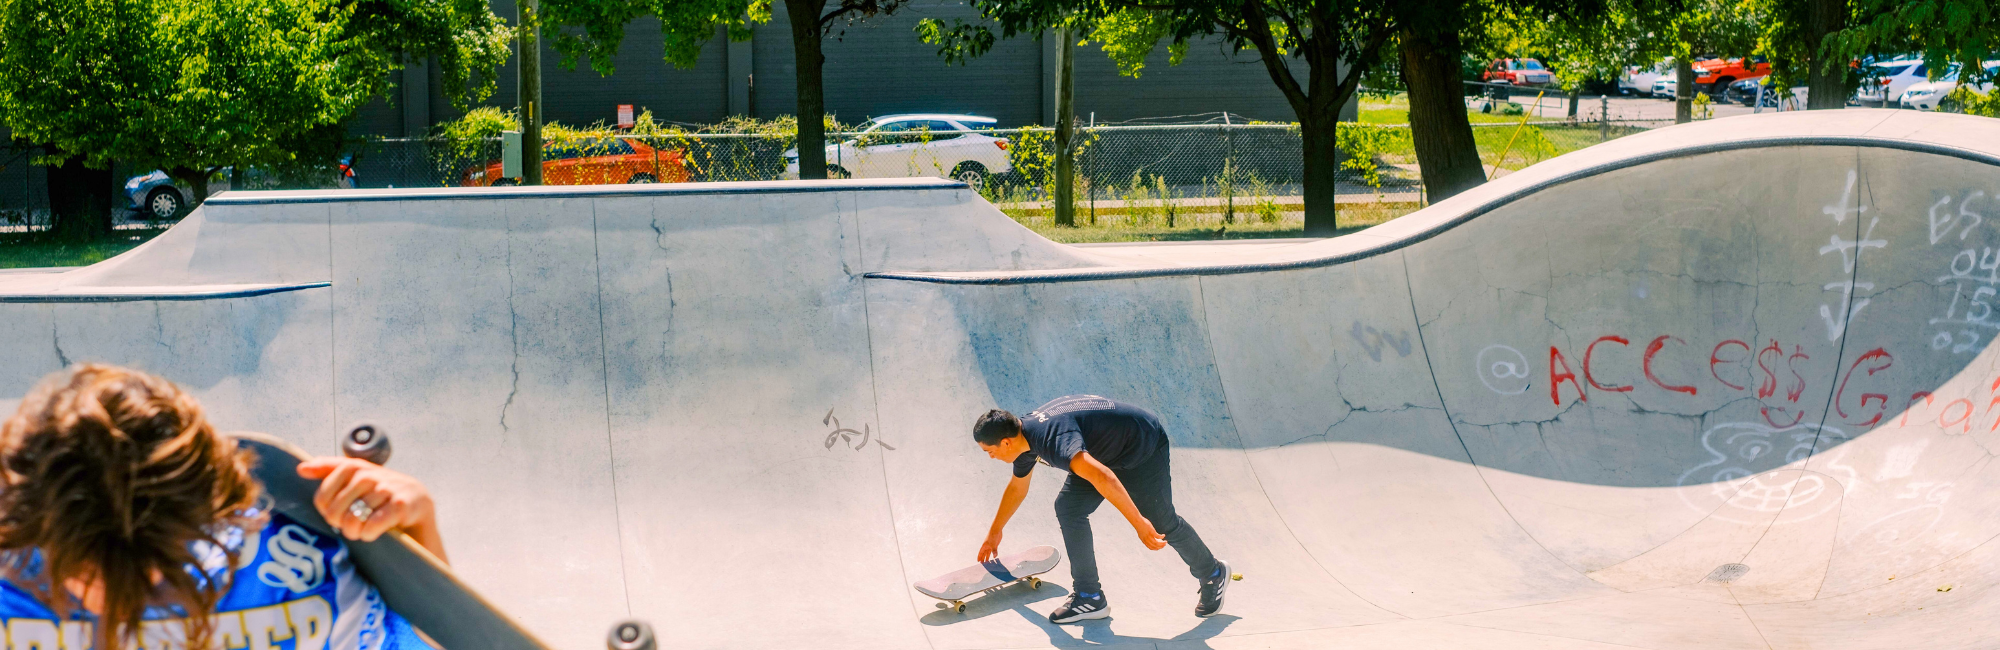 People skateboarding in the Willard Park Flow Bowl